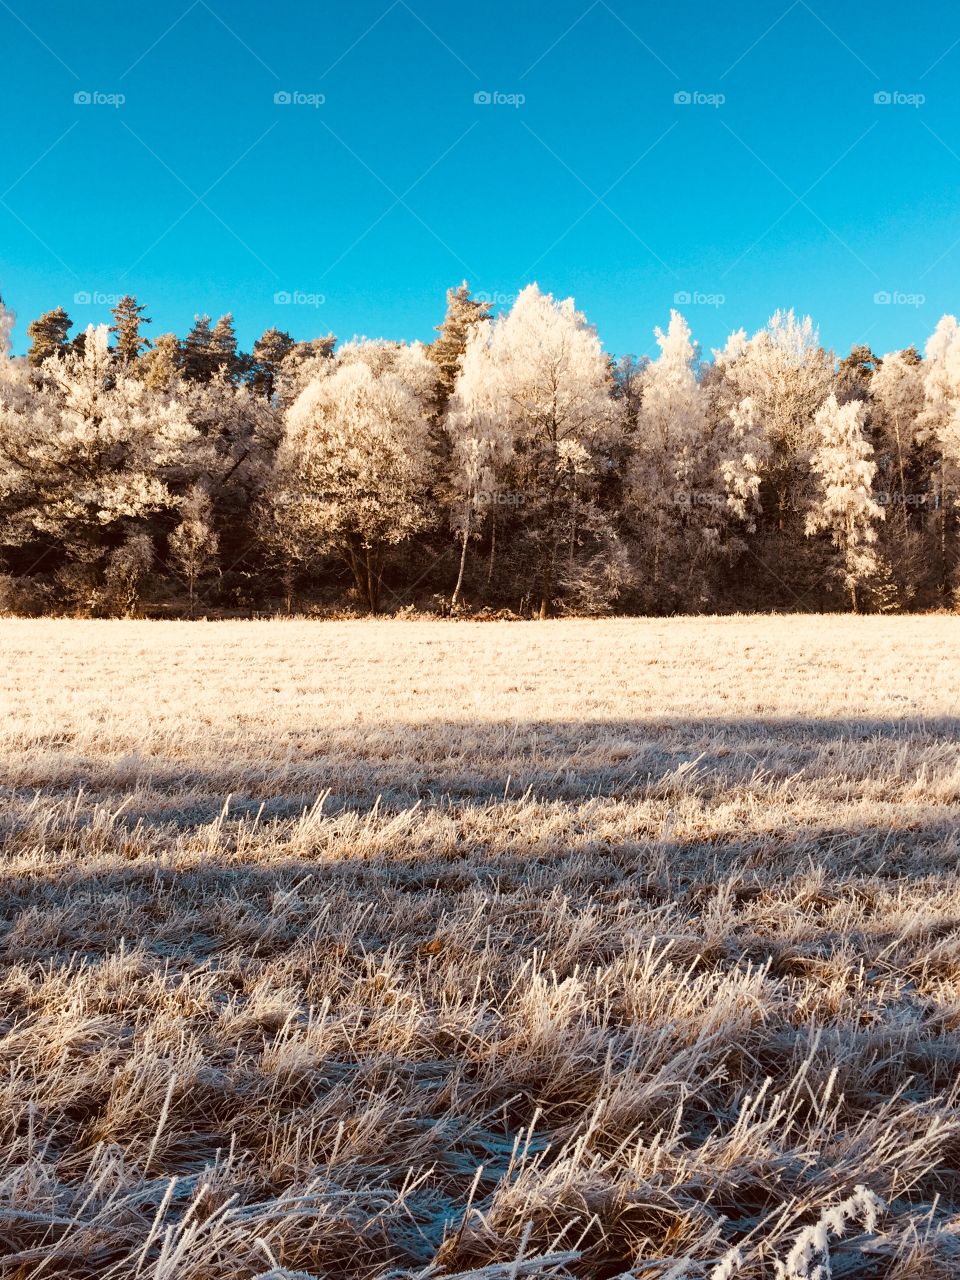 Frozen nature